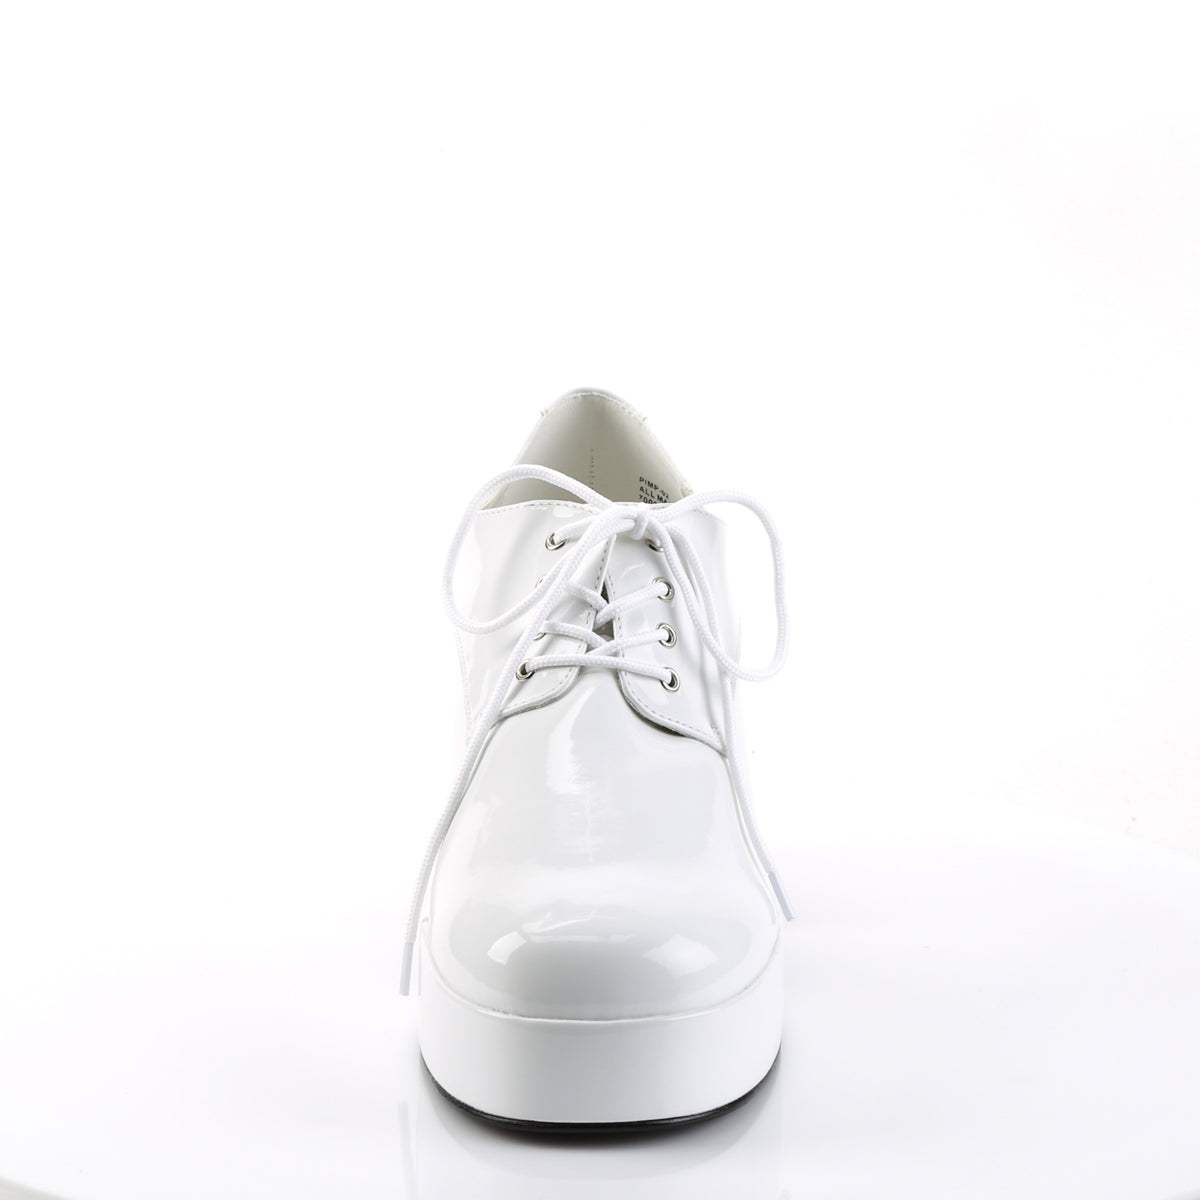 PIMP-02 Fancy Dress Costume Funtasma Men's Shoes White Pat